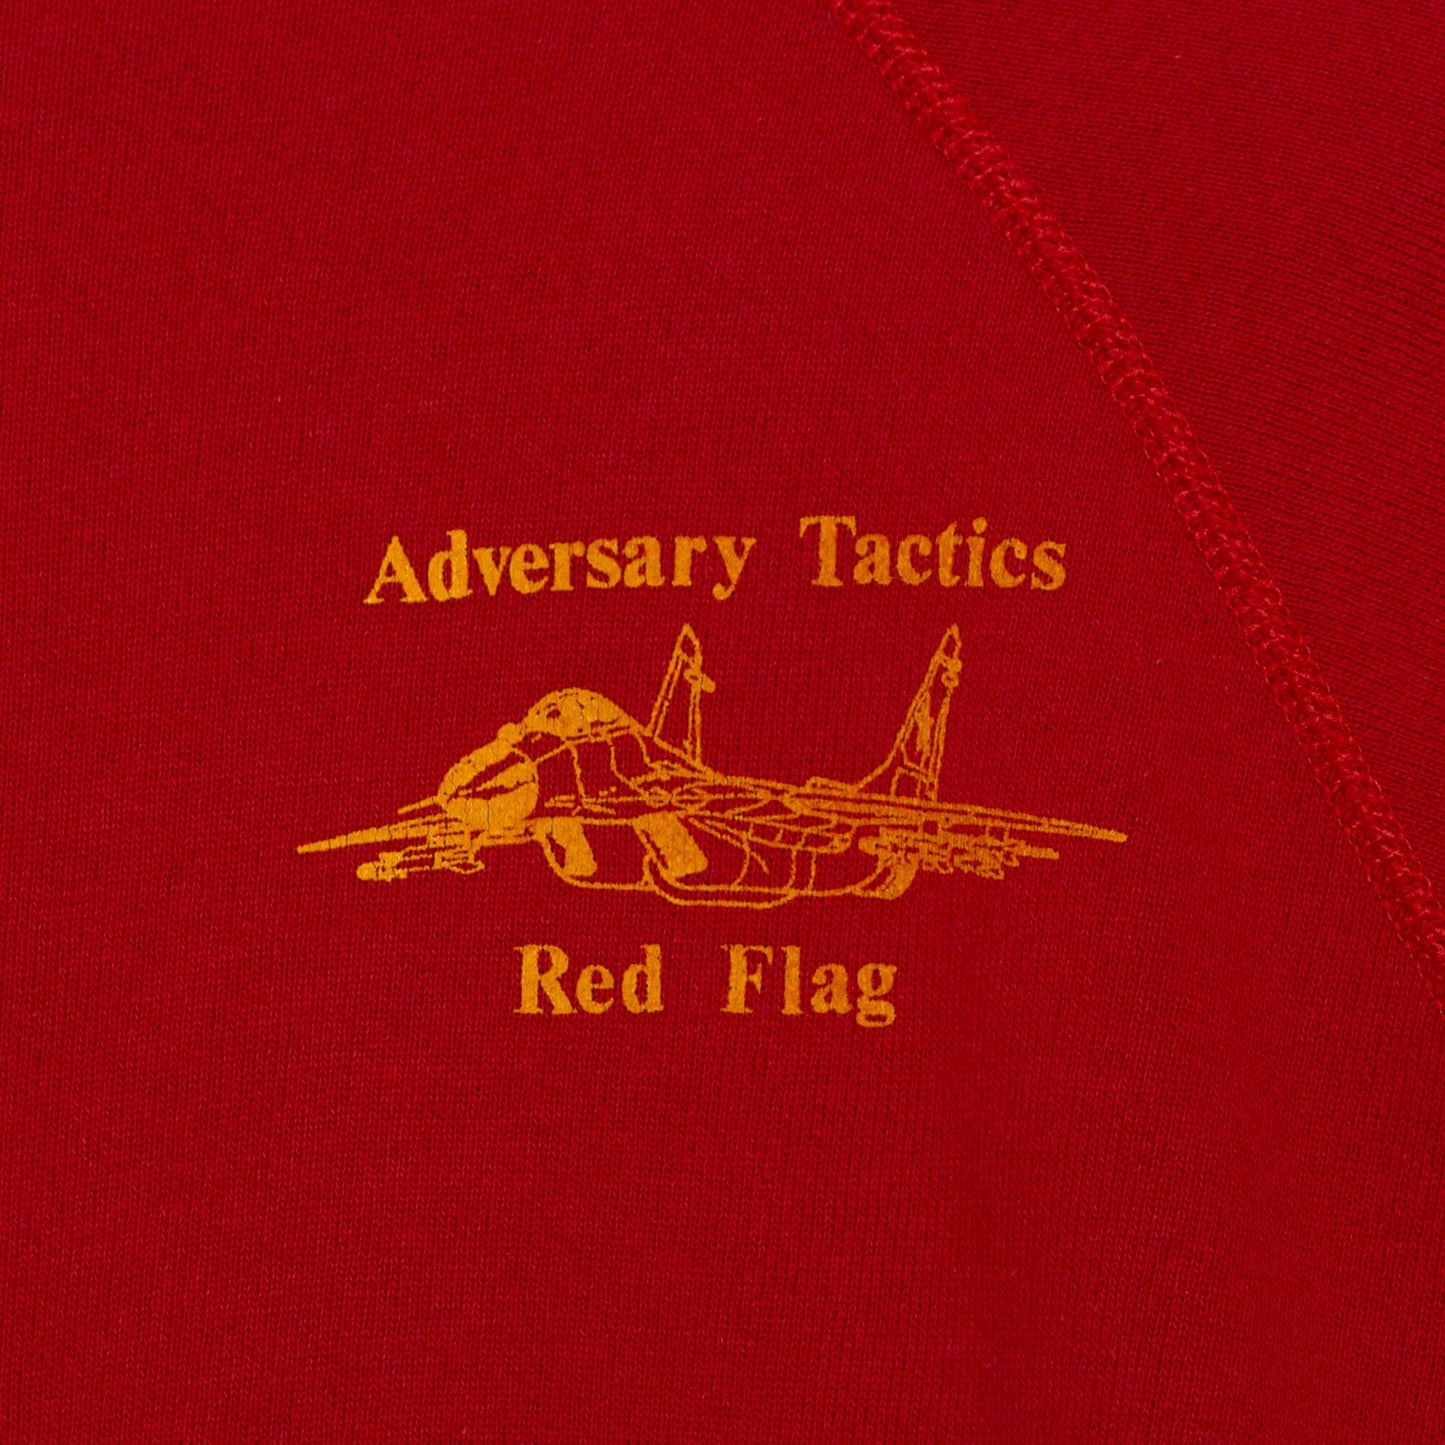 Large 80s Red Flag Fighter Jet Sweatshirt | Vintage Adversary Tactics USAF Graphic Raglan Sleeve Crewneck